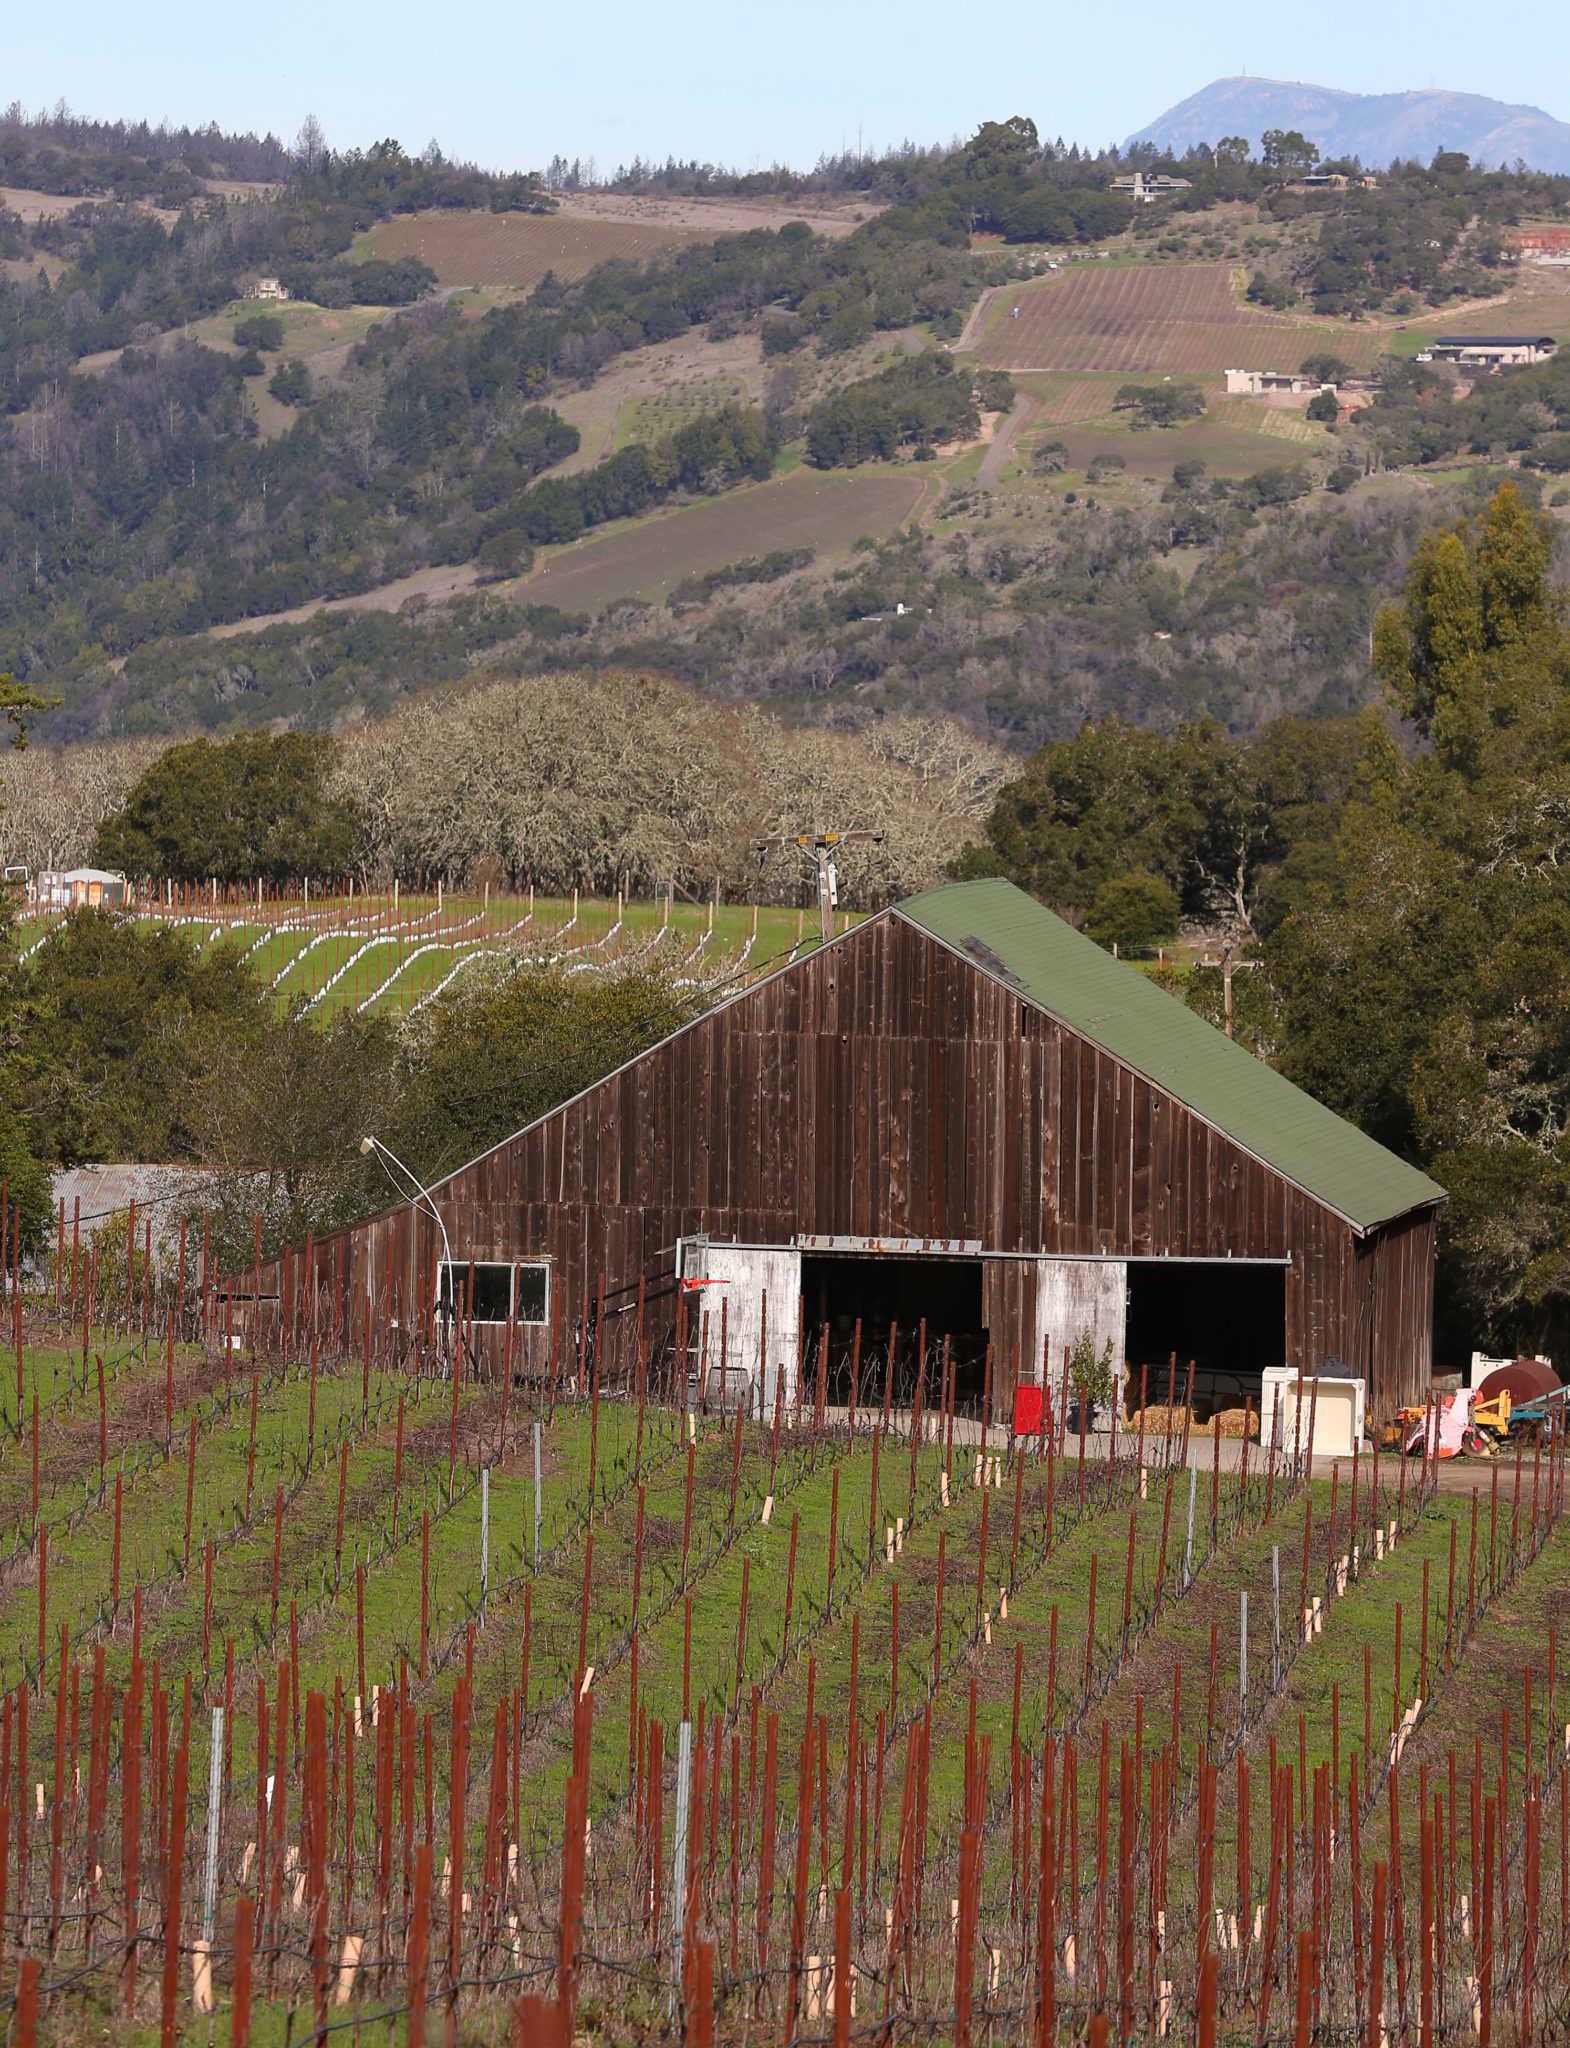 The barn nestled among the vineyards on the Belden Barns property, on the northwest shoulder of Sonoma Mountain, near Santa Rosa on Thursday, January 30, 2020. (Christopher Chung/ The Press Democrat)